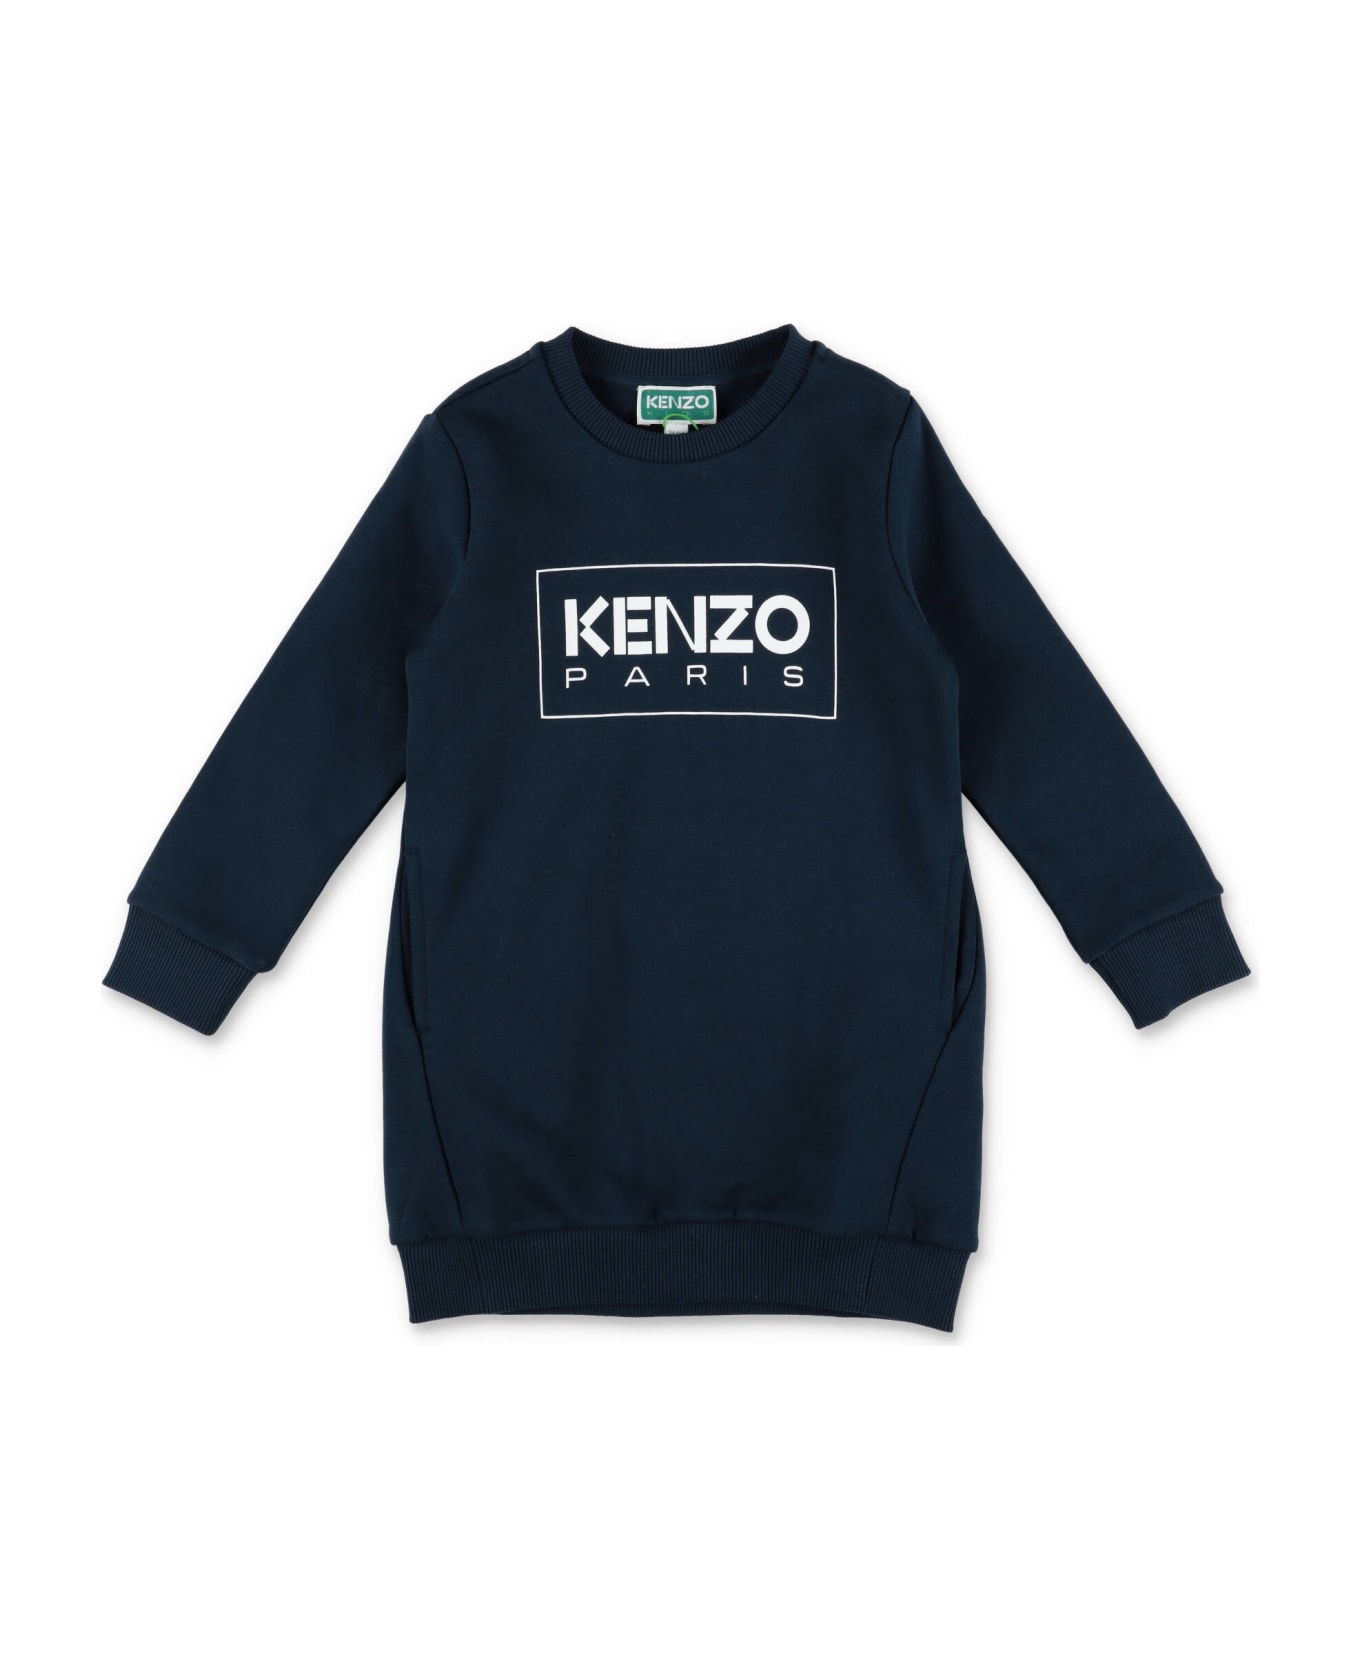 Kenzo Kids Kenzo Abito Blu Navy In Felpa Di Cotone Bambina - Blu